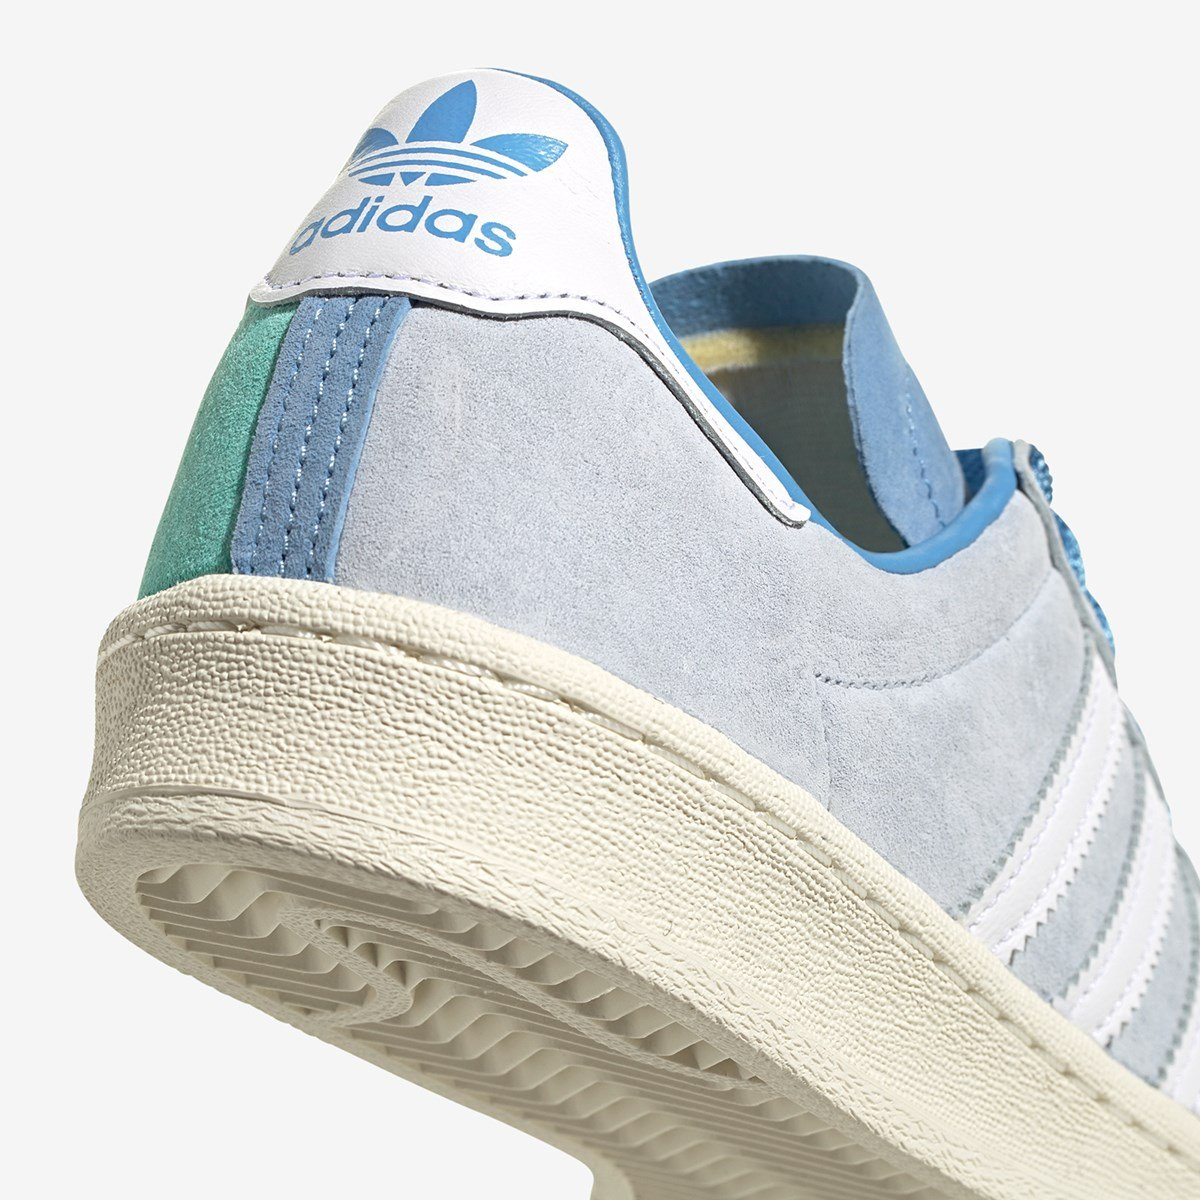 Adidas - Campus 80s -  Halo Blue White